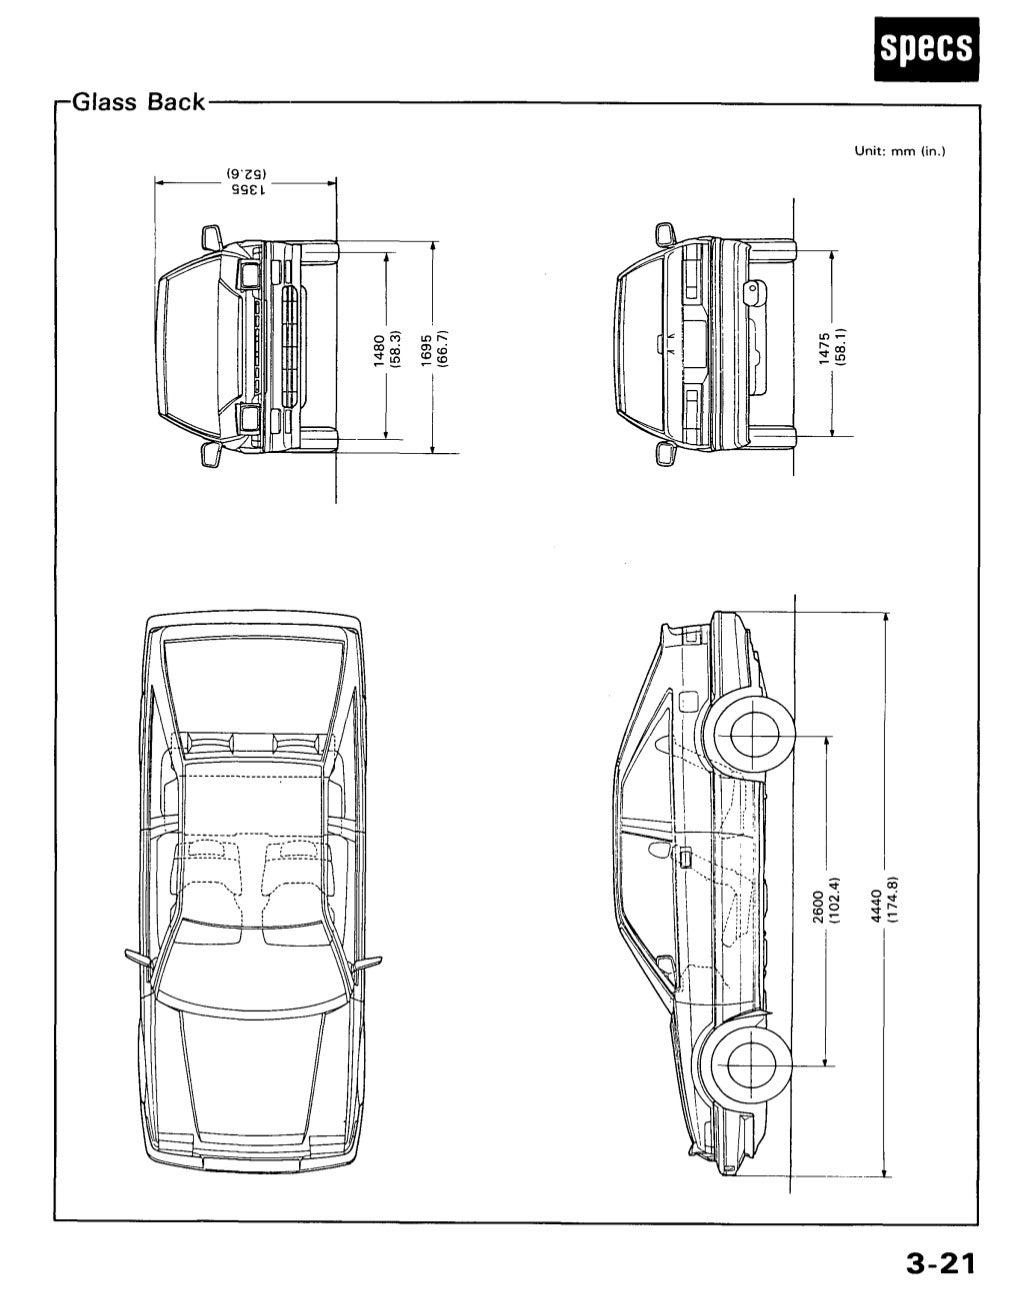 1986 Honda Accord Service Repair Manual